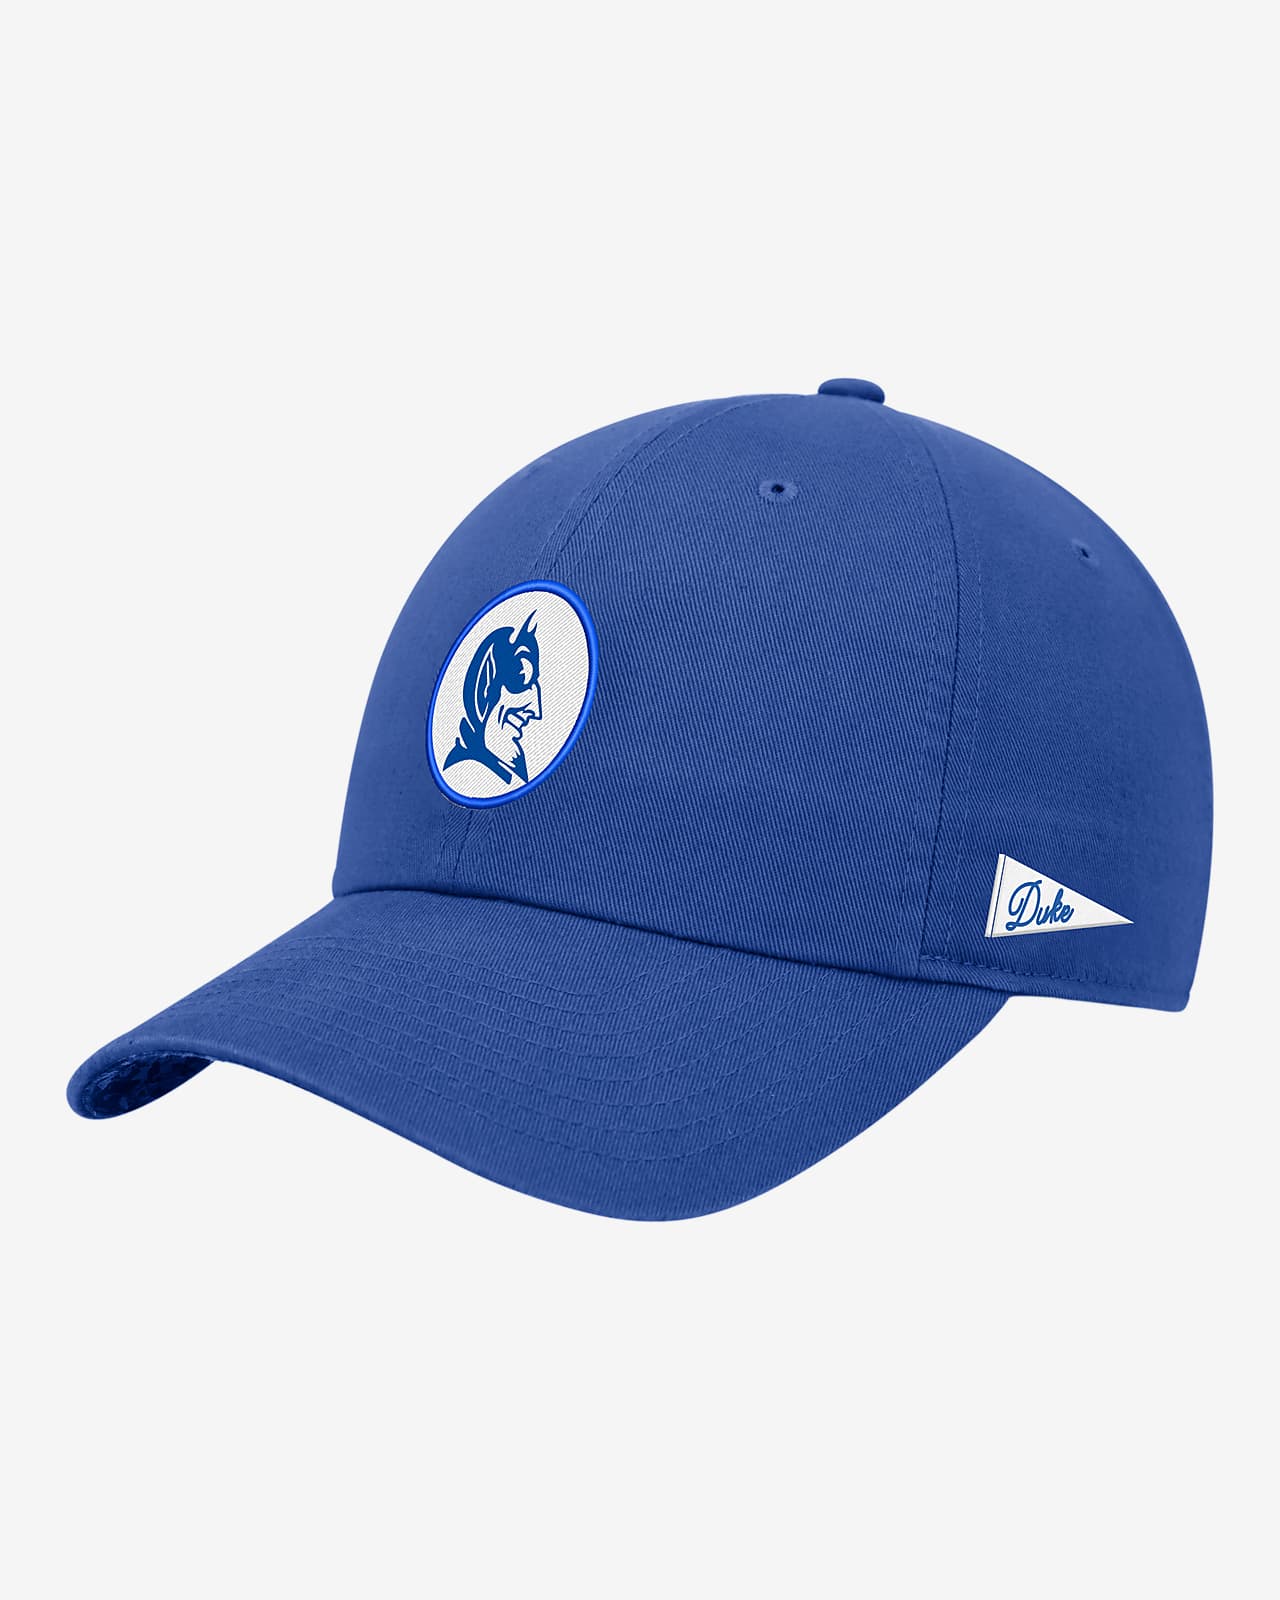 Duke Logo Nike College Adjustable Cap